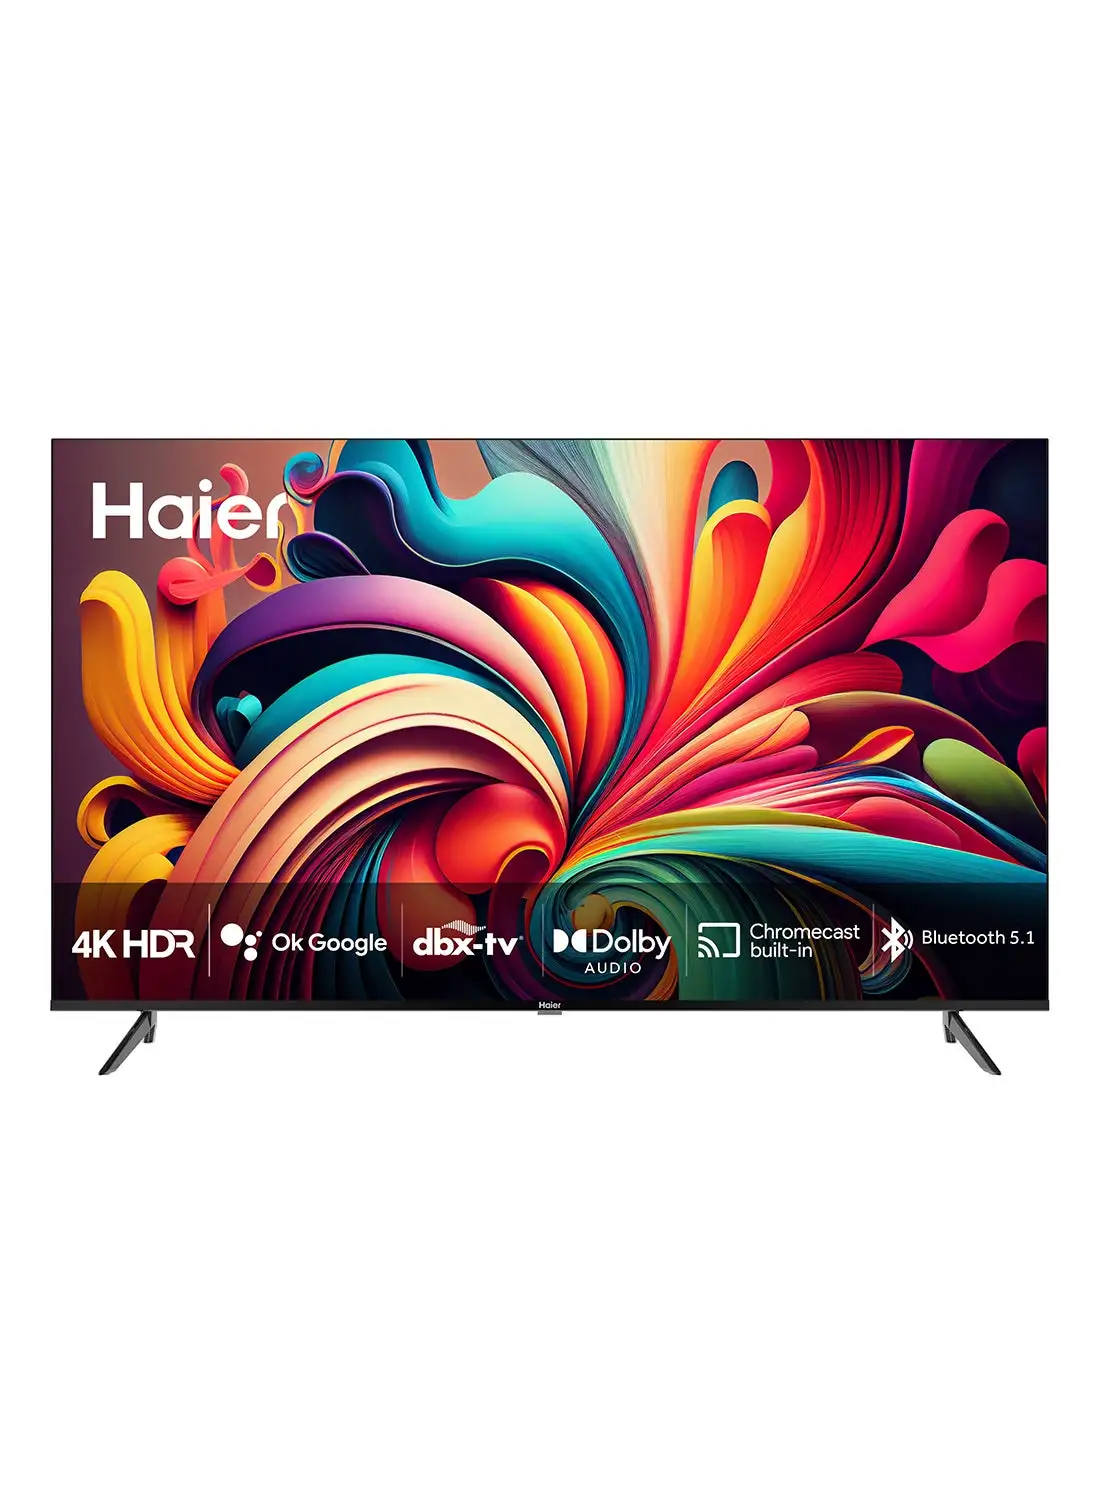 Haier 55-Inch Smart TV Android 4K HDR H55K800UG Black